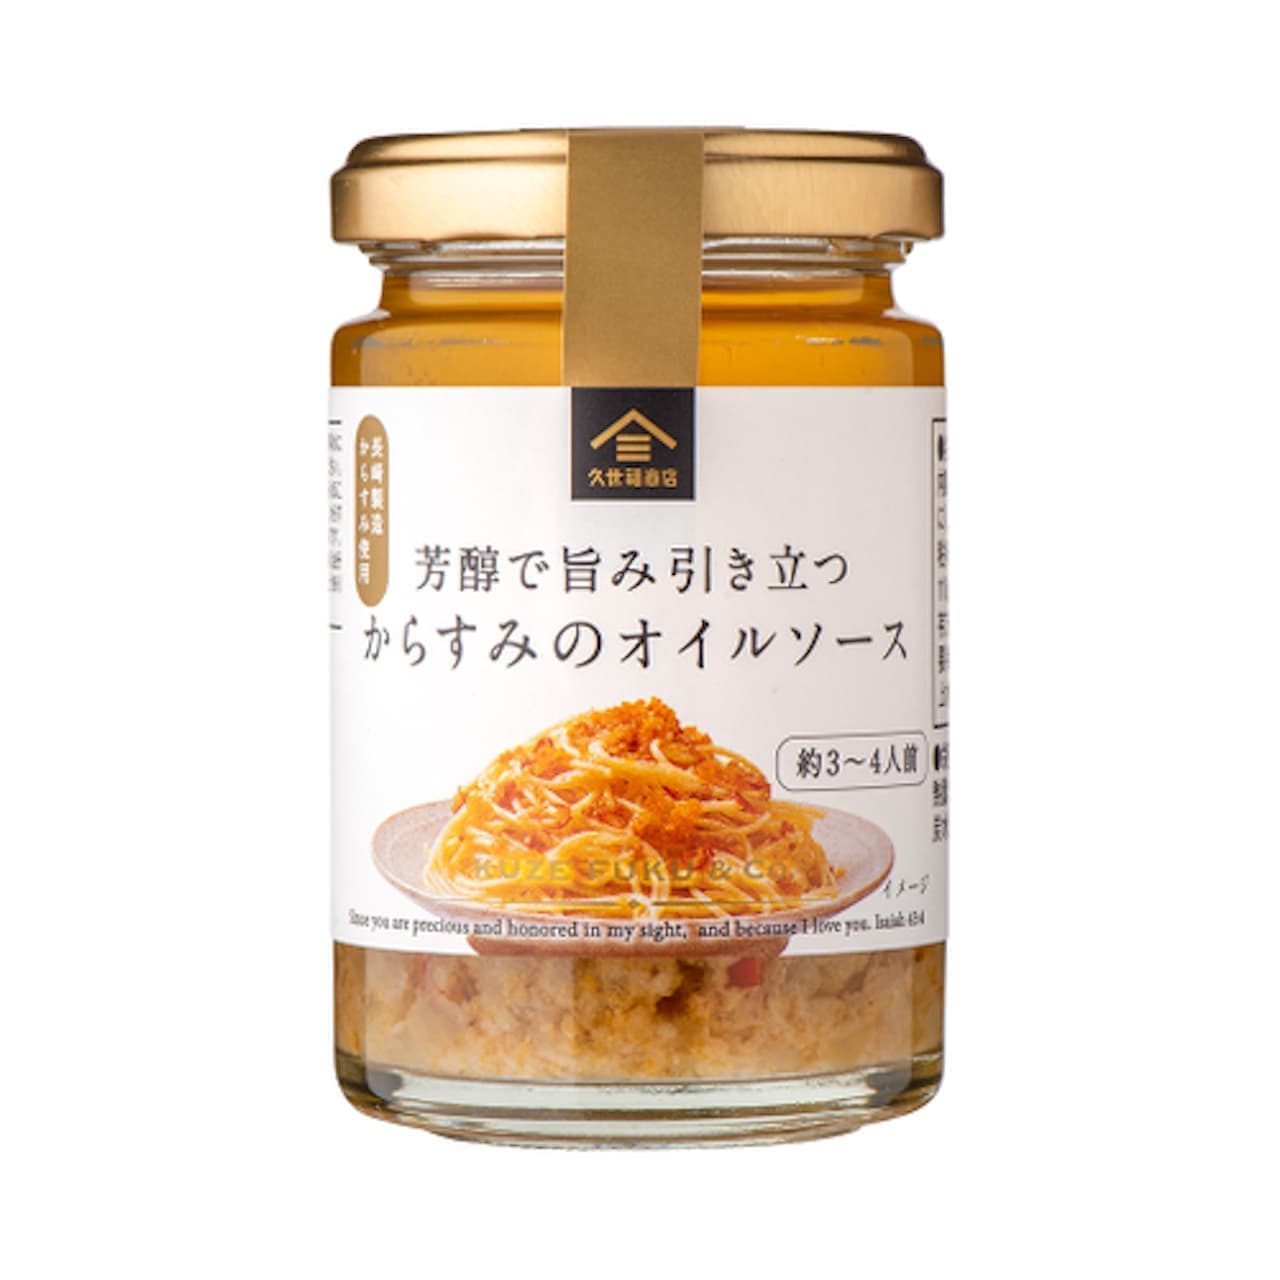 KUZE FUKU SHOTEN "Mellow and deliciously tasty Karasumi oil sauce" (Japanese only)